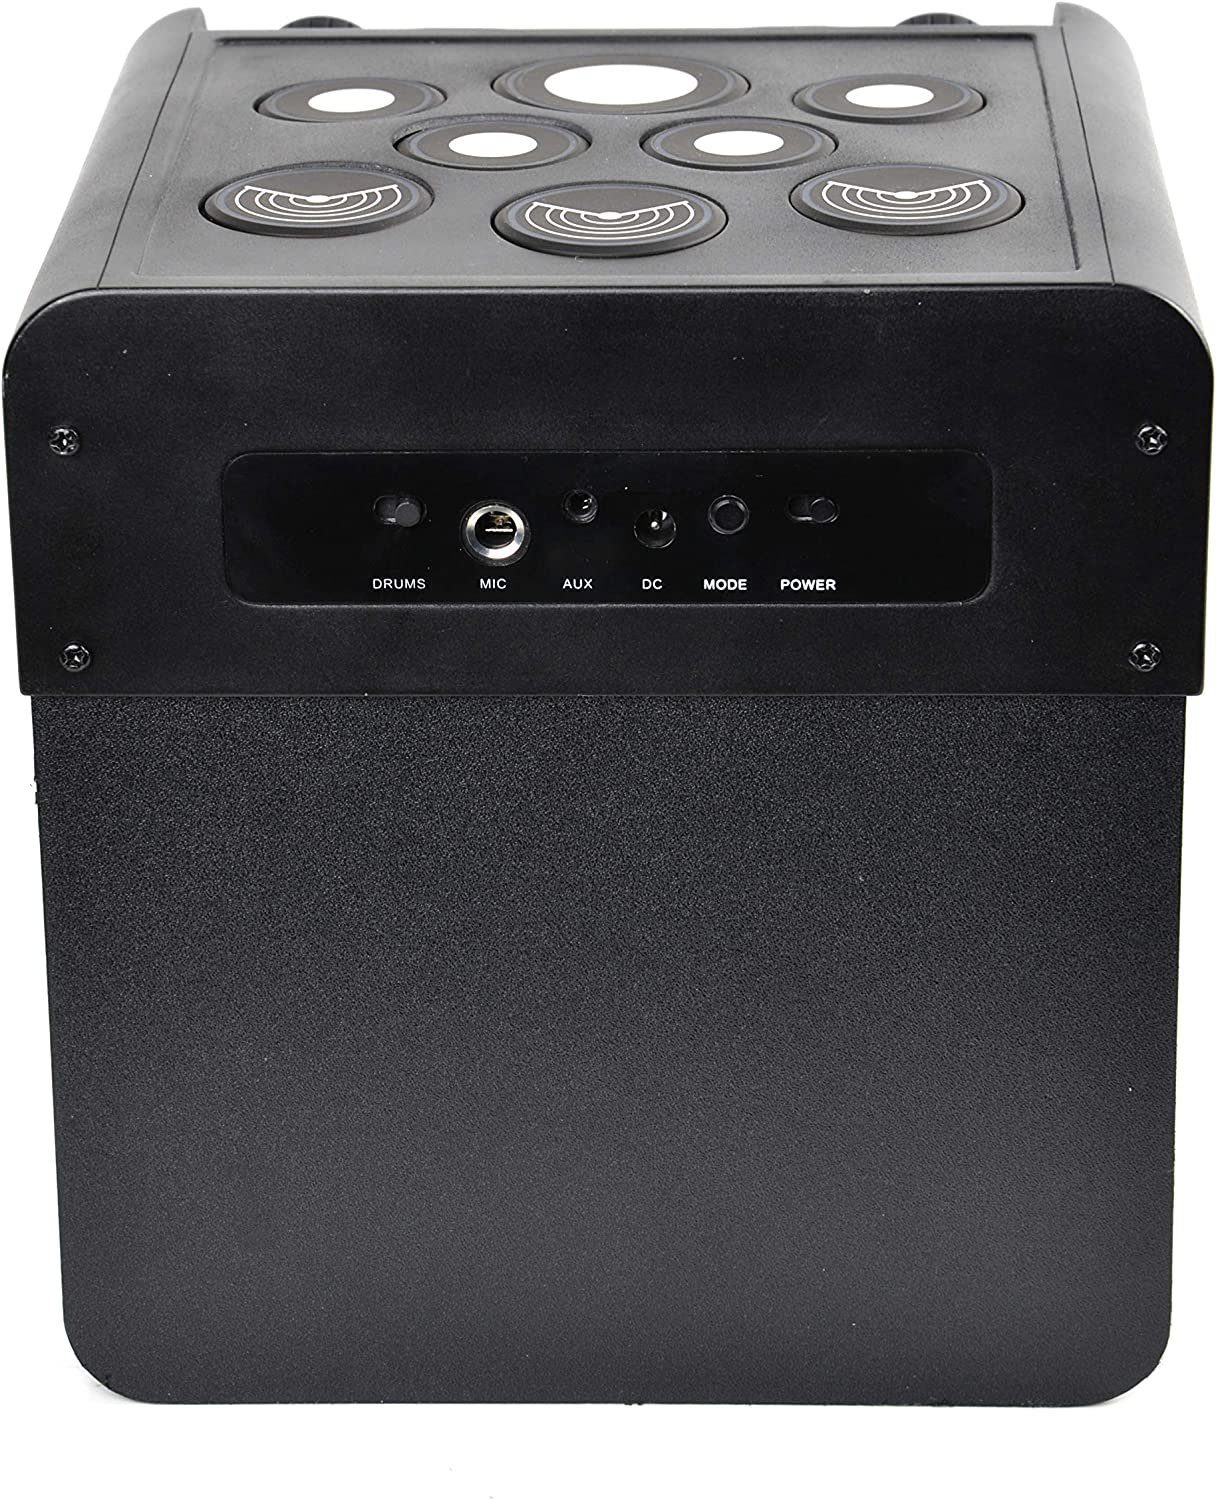 N-GEAR N-Gear Bluetooth-Lautsprecher mit Mikrofon E-Drums Bluetooth-Lautsprecher und Leuchteffekten